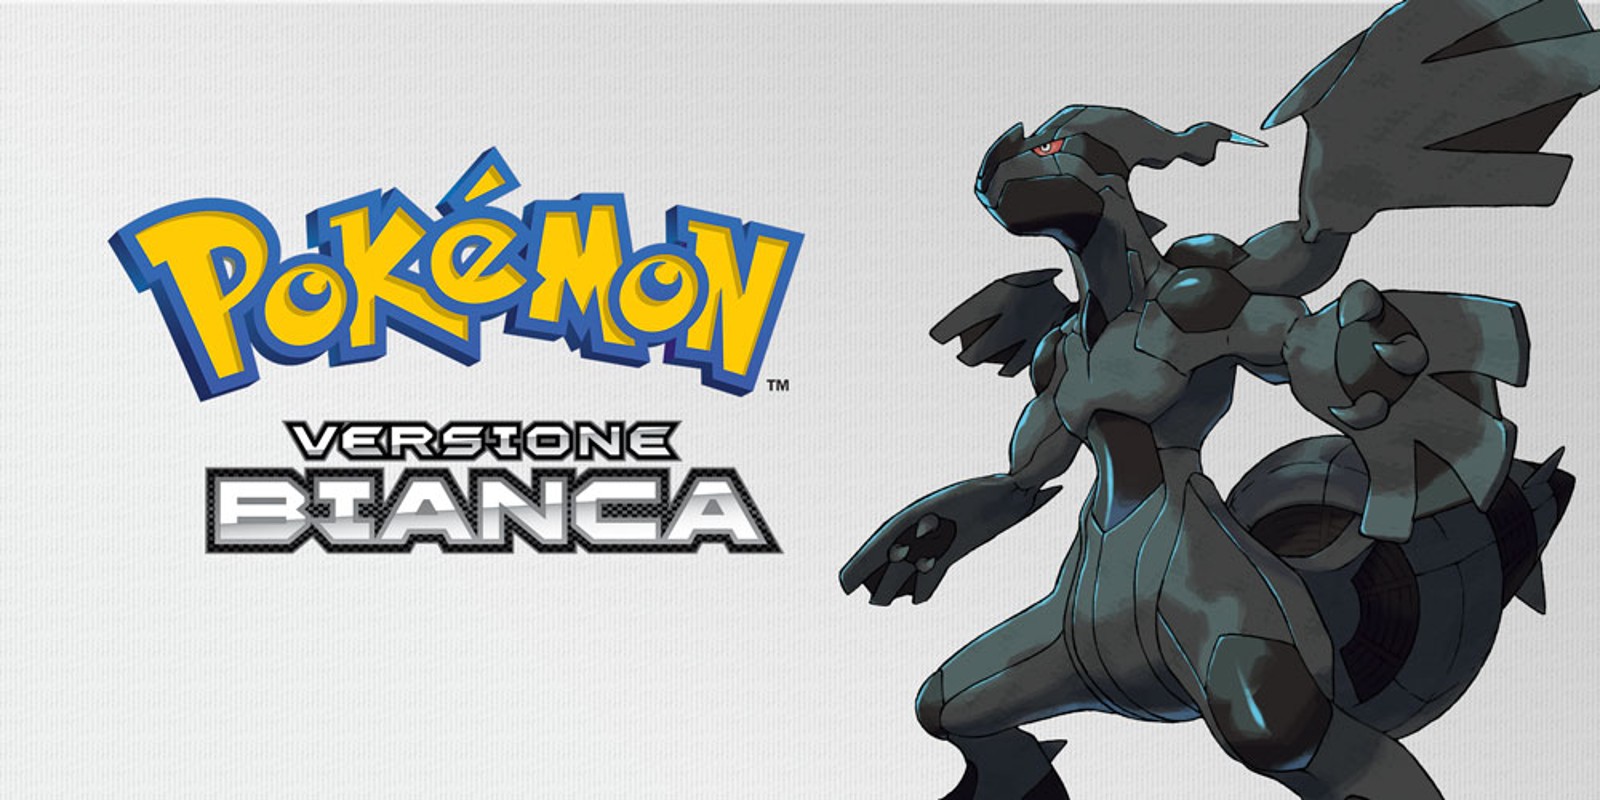 Pokémon Versione Bianca